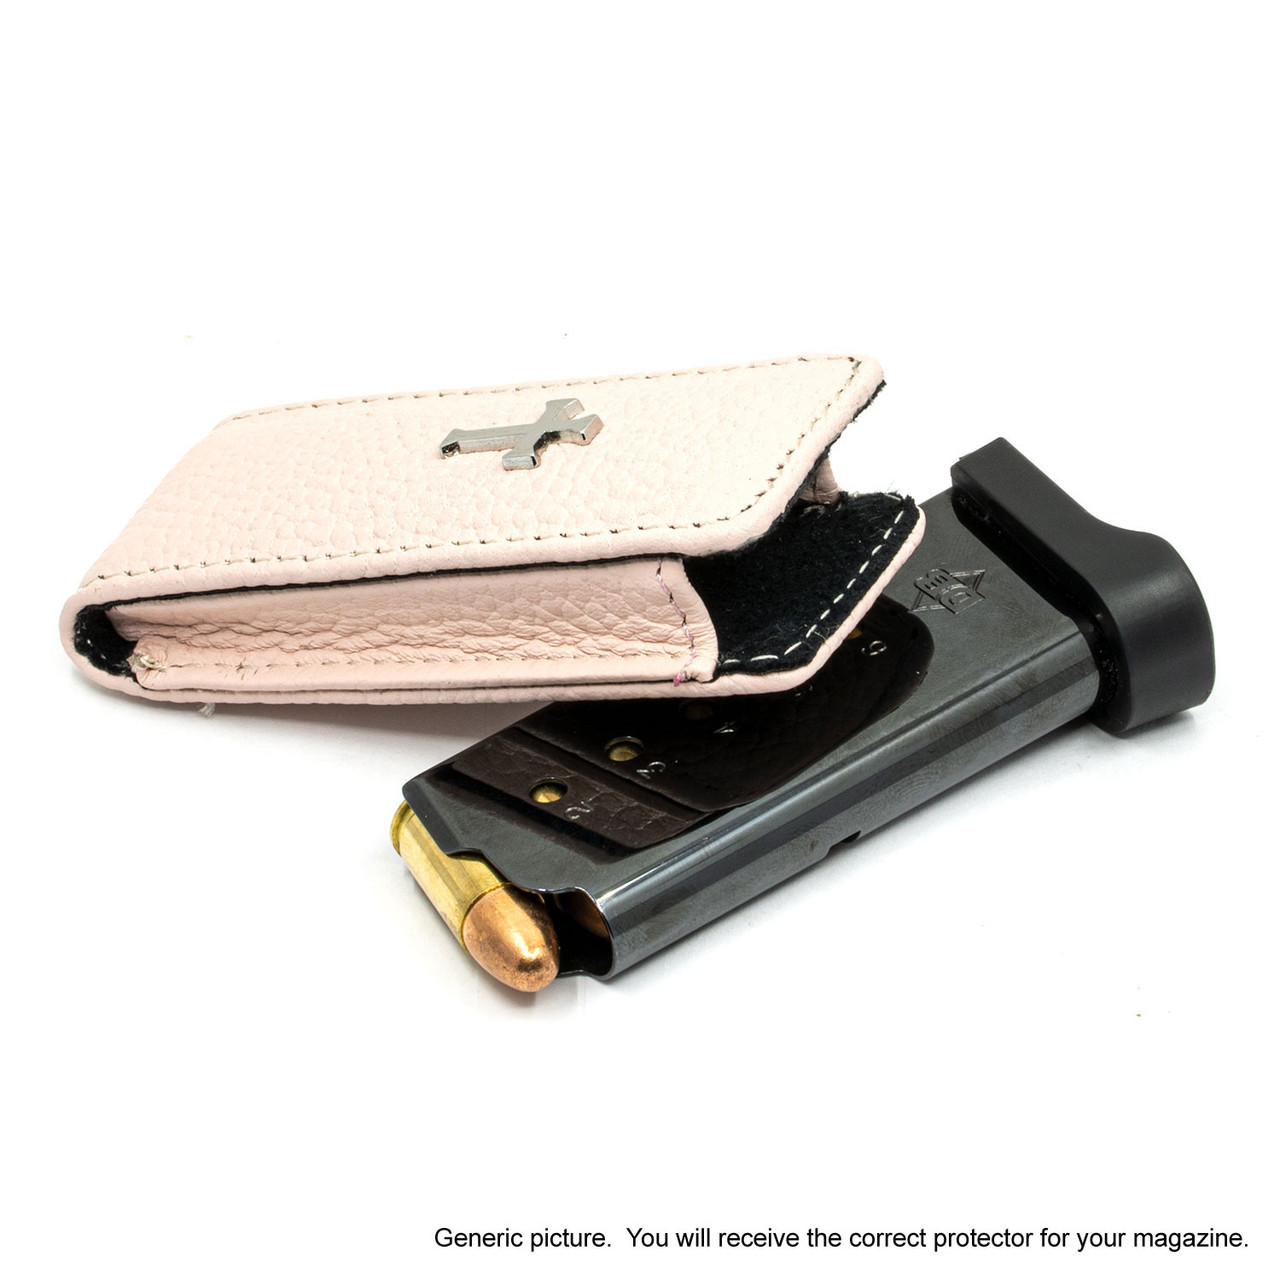 Keltec P3AT Pink Carry Faithfully Cross Magazine Pocket Protector